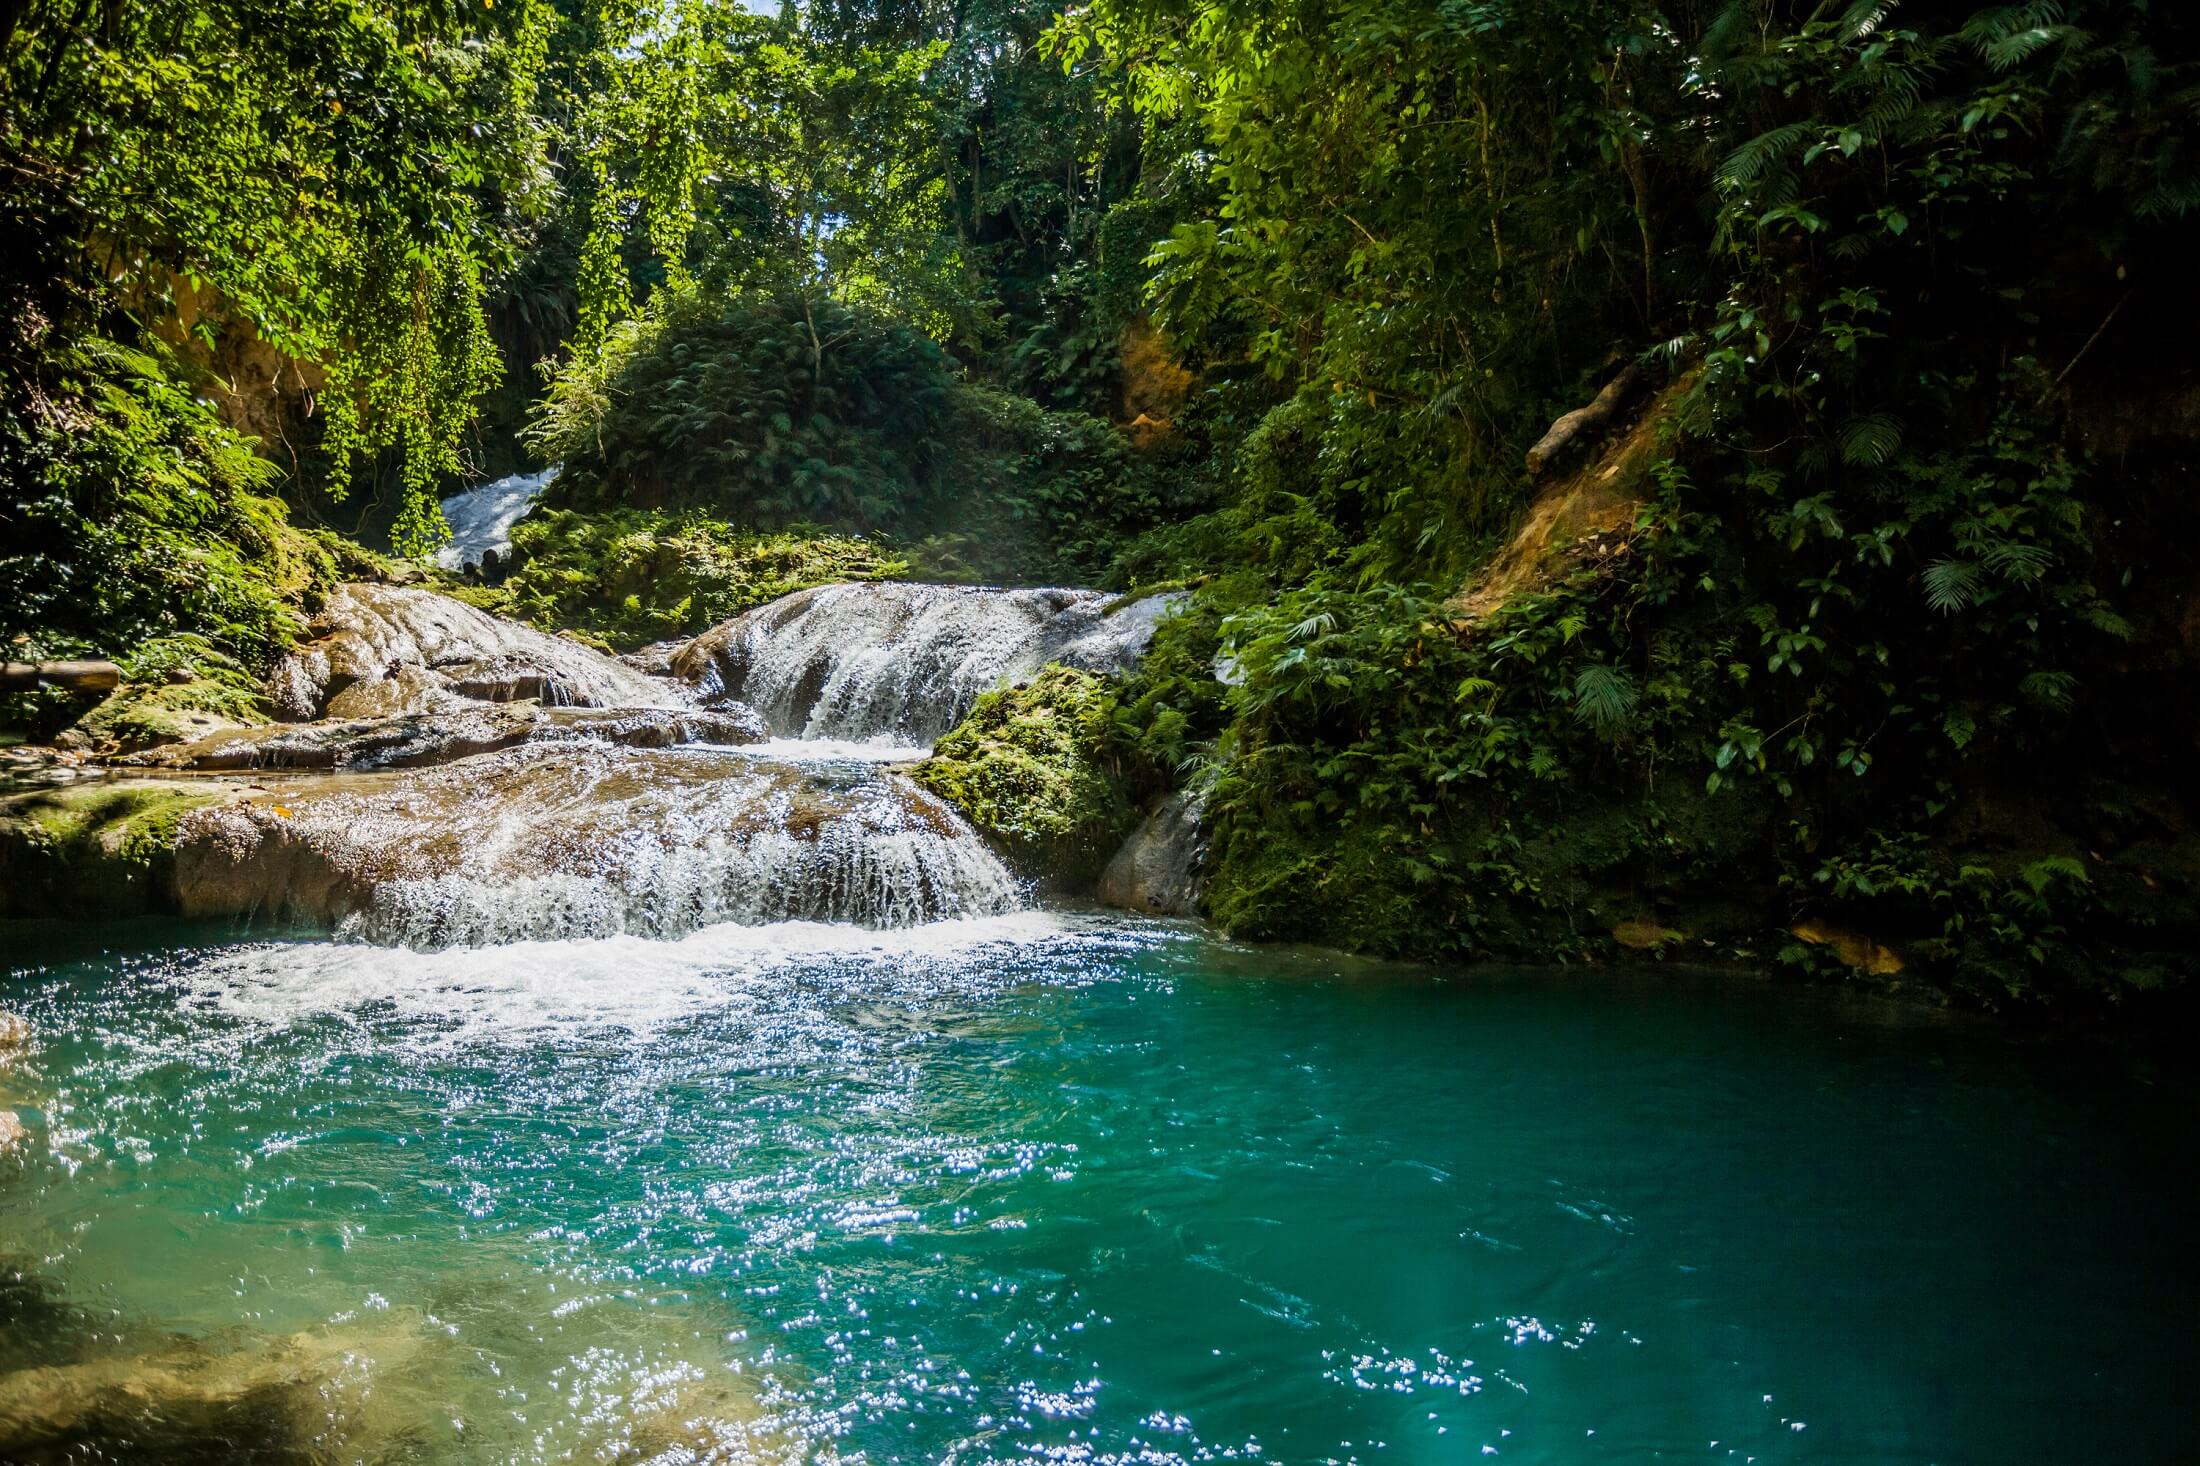 Jamaica pure waters